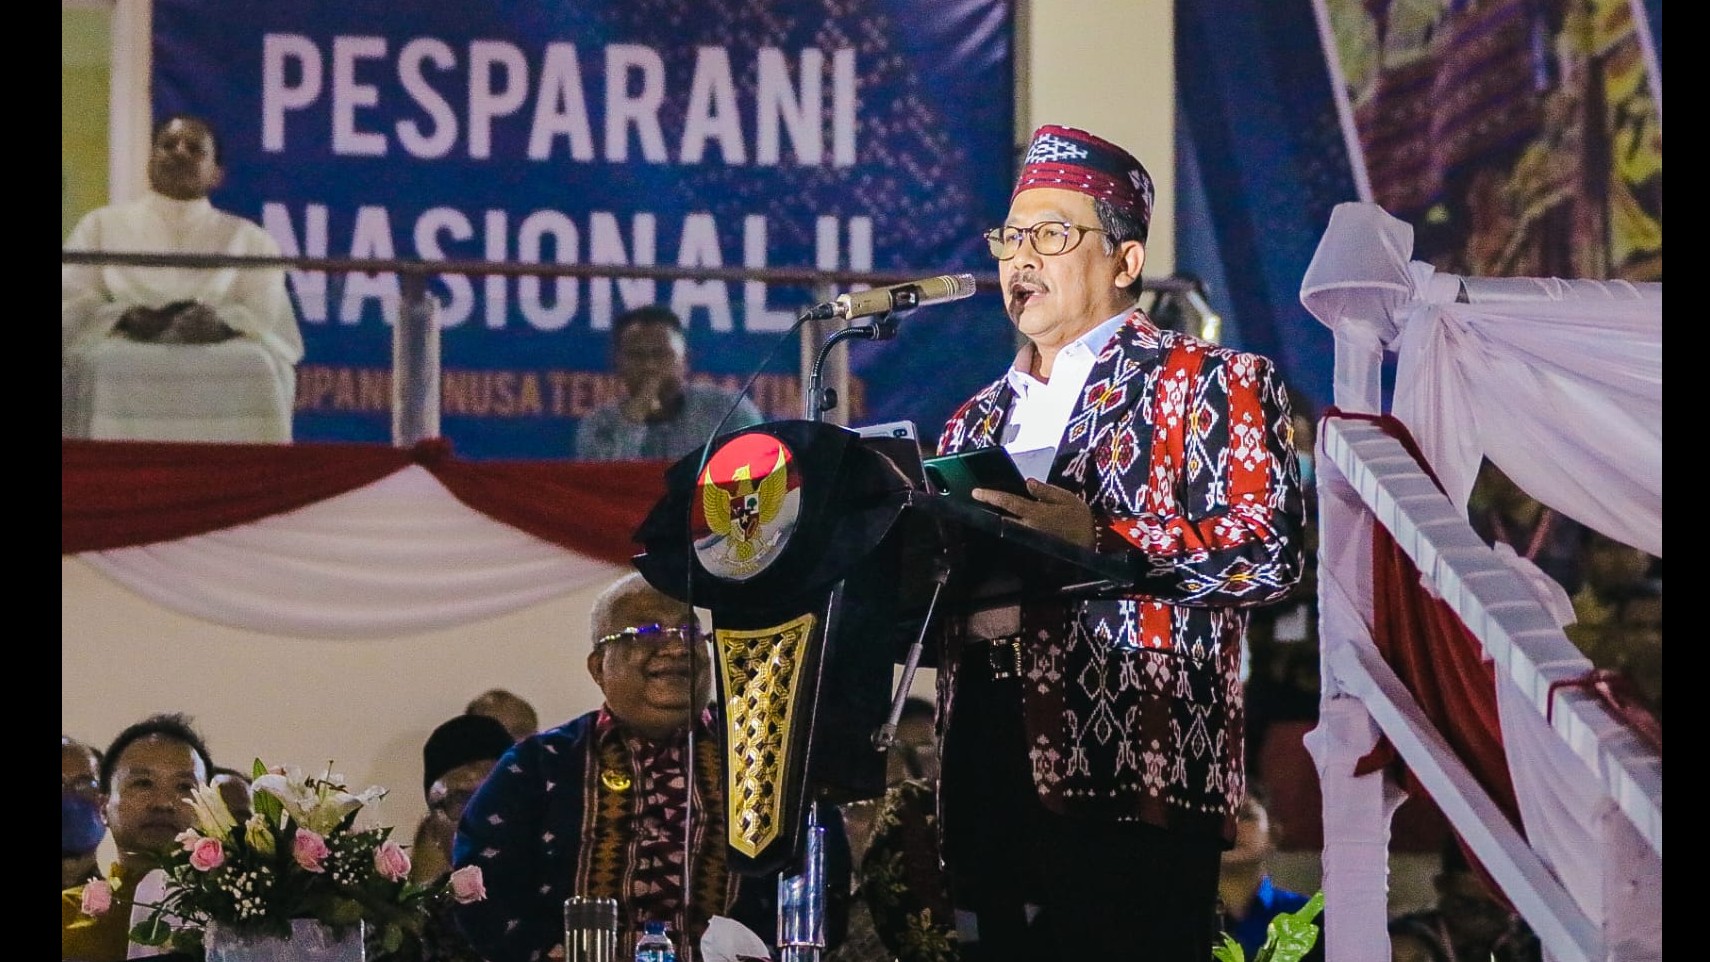 Wamenag Zainut Tauhid tutup Pesparani Nasional di Kupang